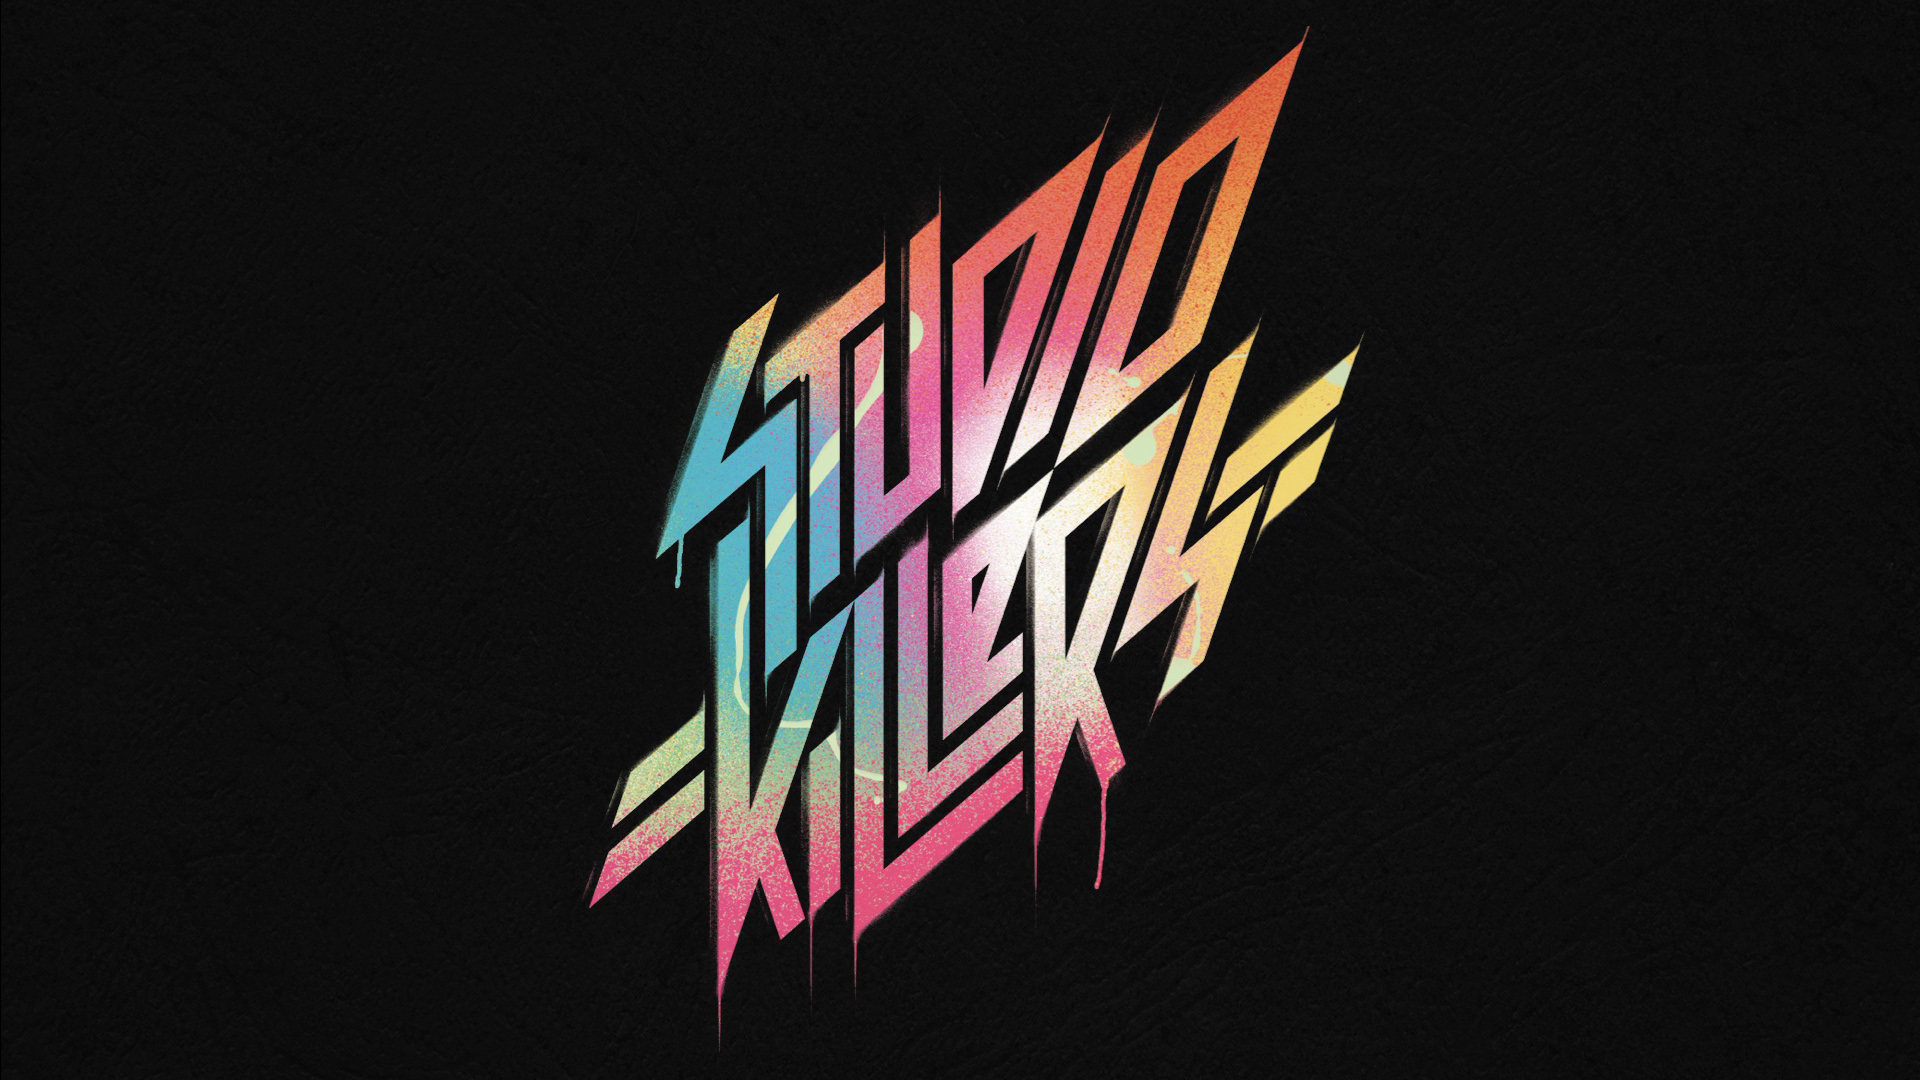 Studio Killers Wallpaper by ThePal on DeviantArt